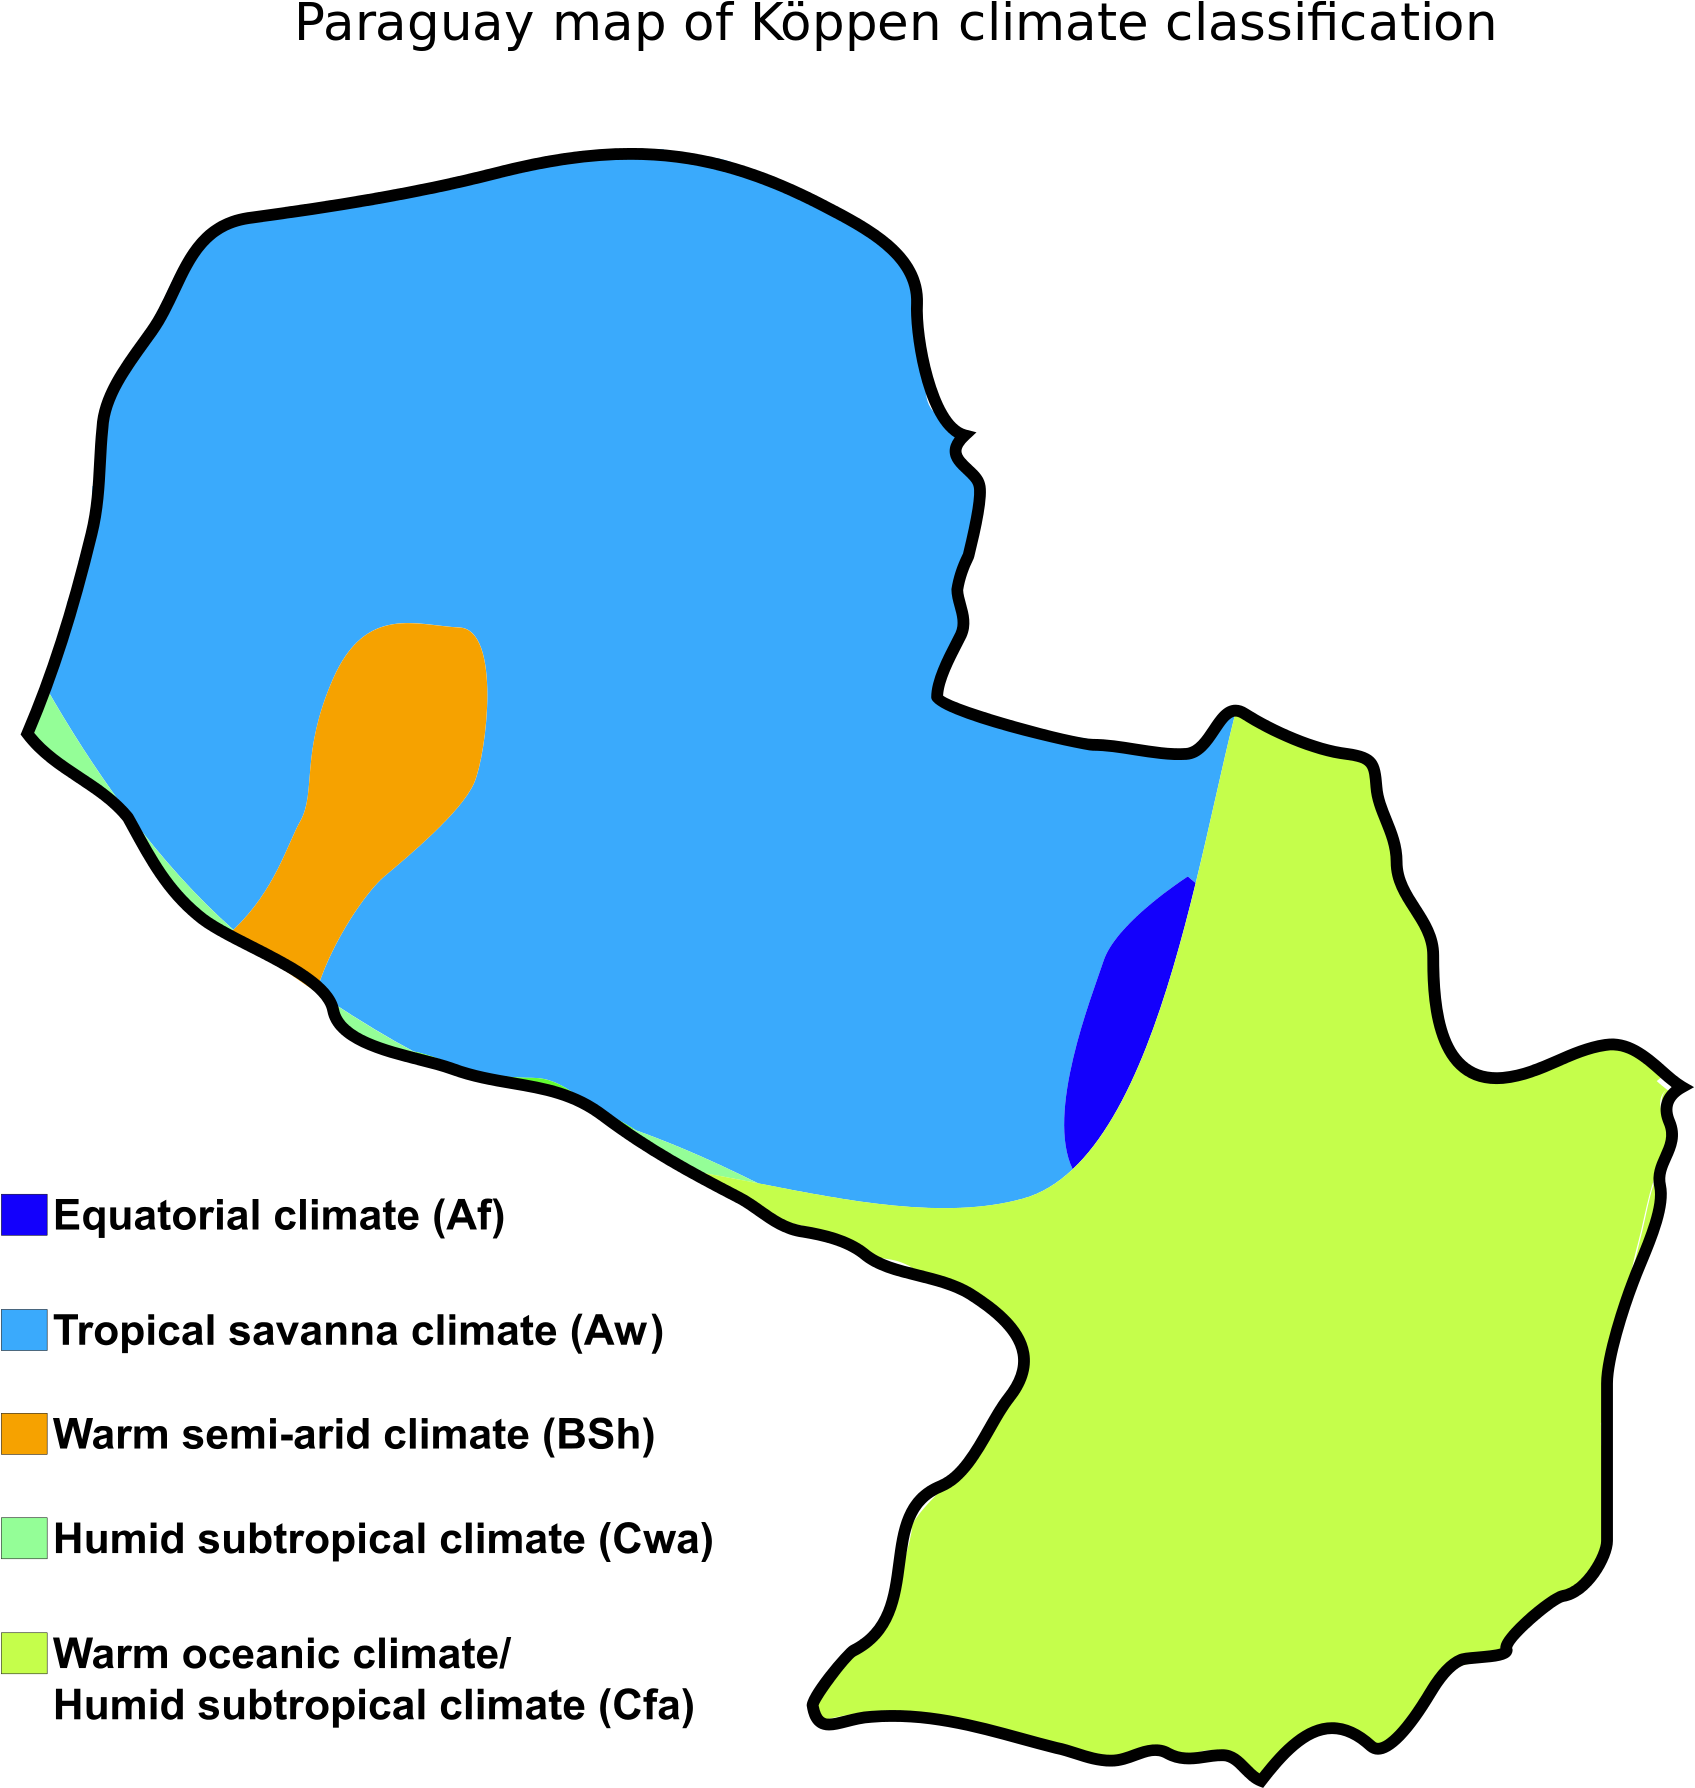 Paraguay Koppen Climate Classification Map PNG image